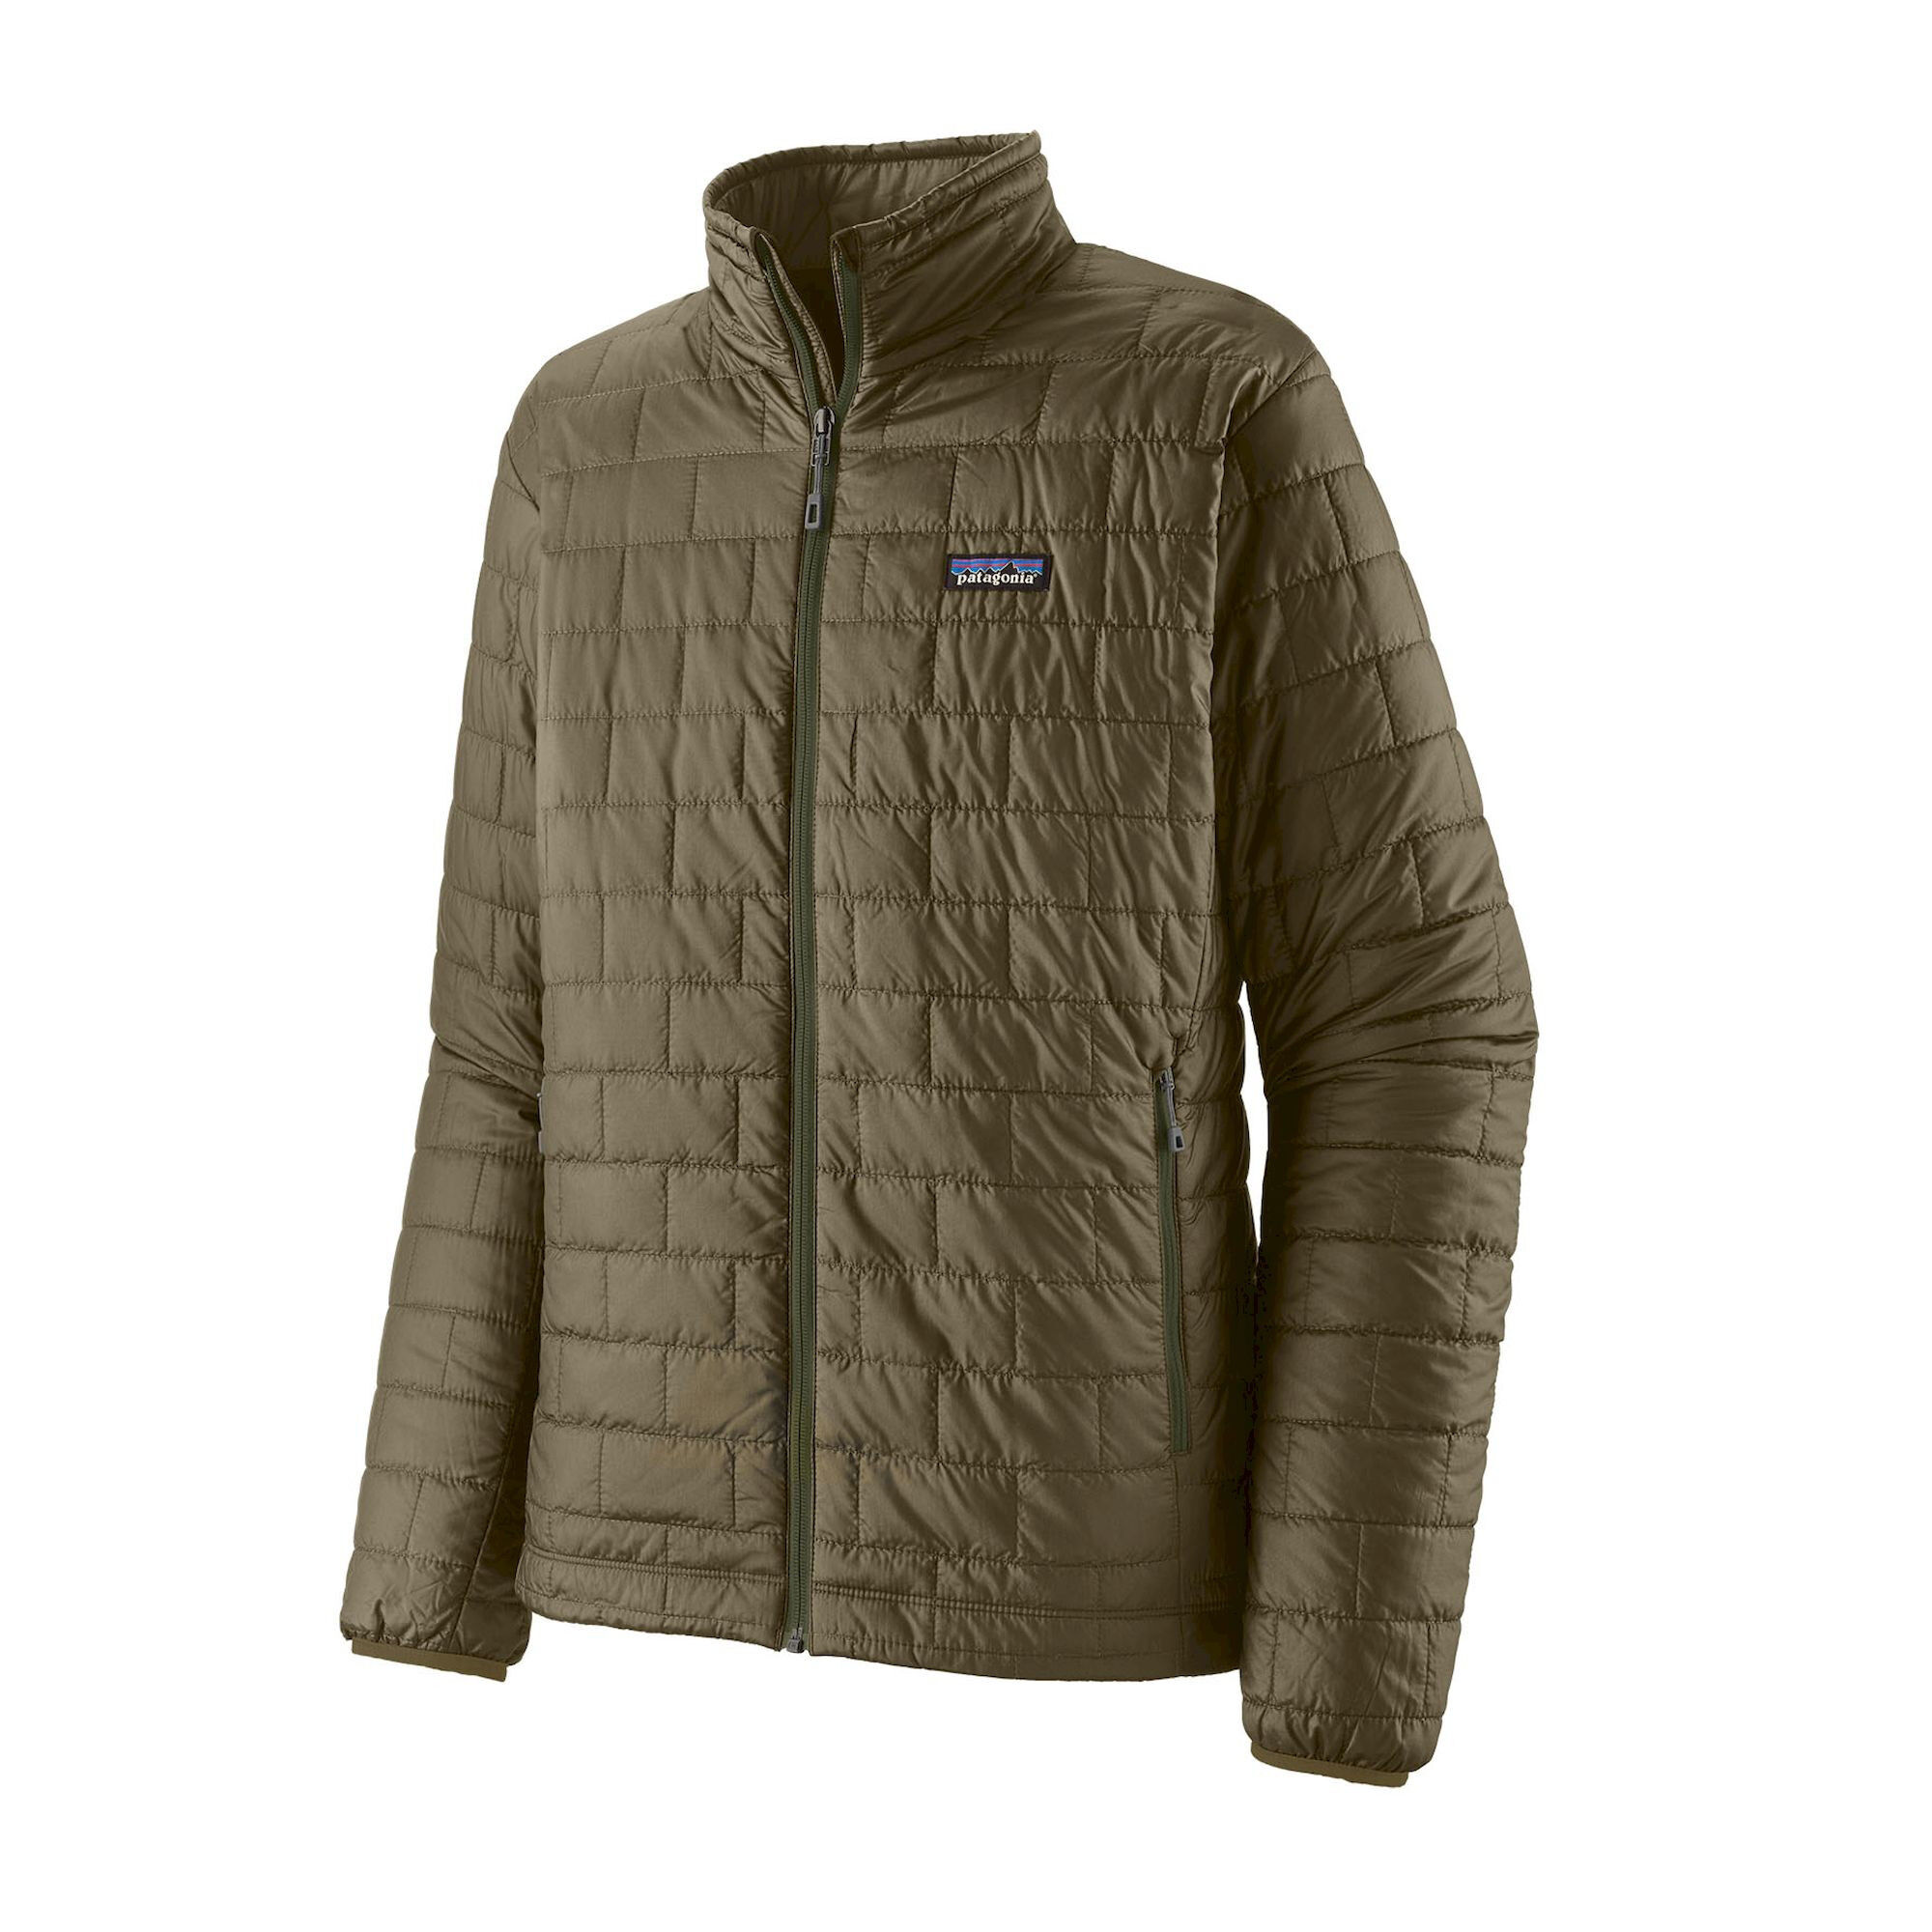 Patagonia - Nano Puff - Insulated jacket - Men's